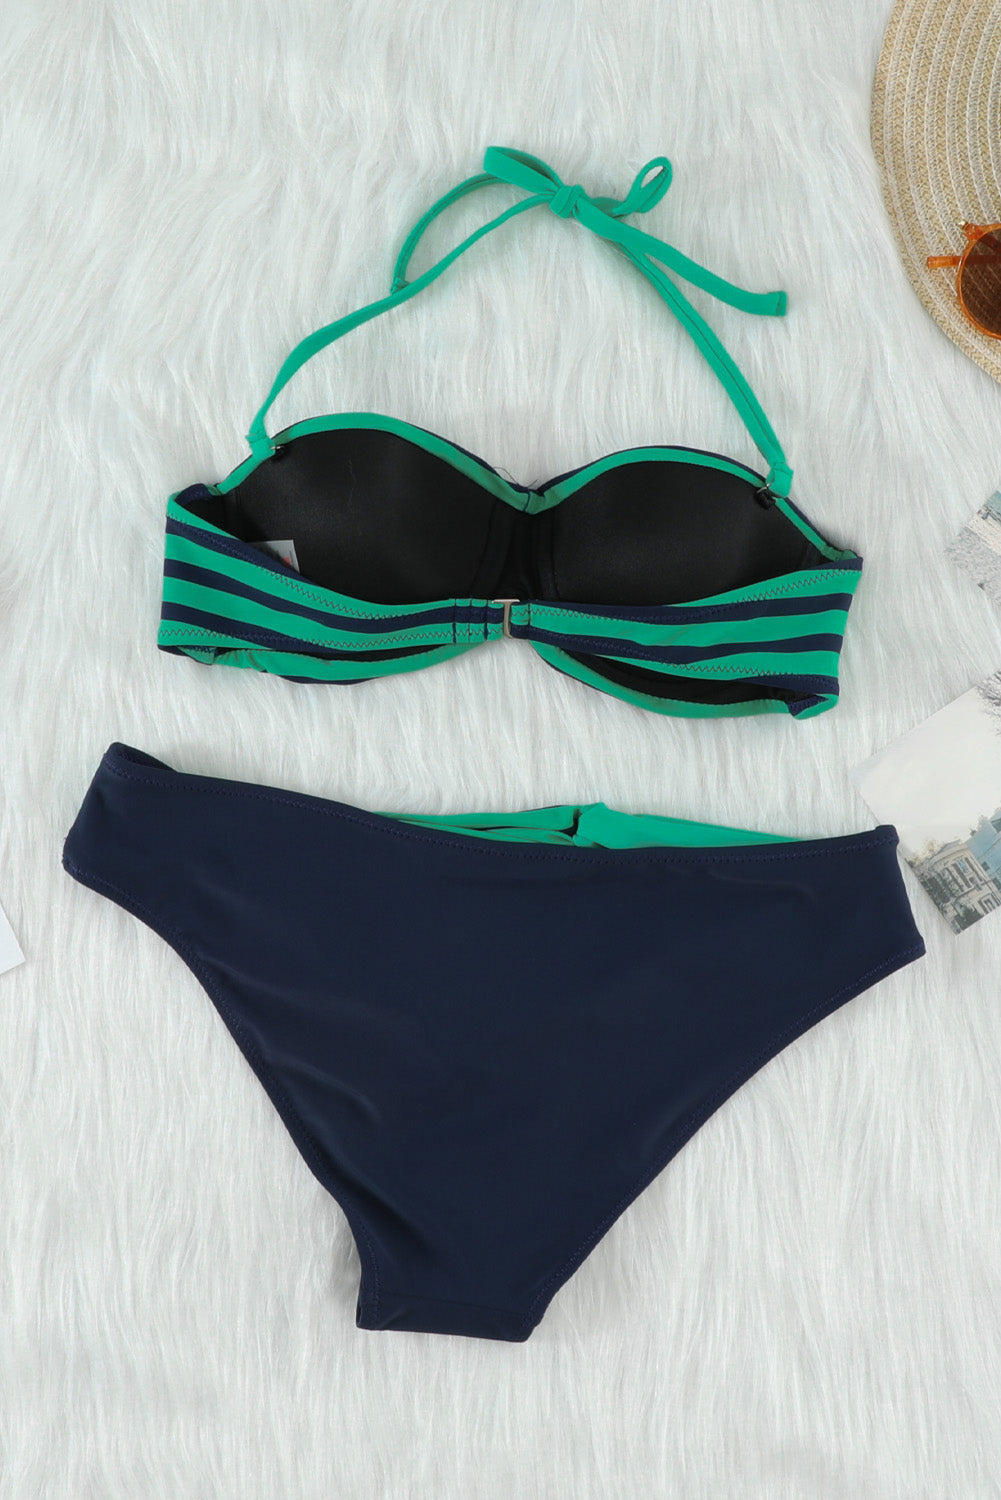 【victoria secret】Green Halter Bandeau Striped Bikini